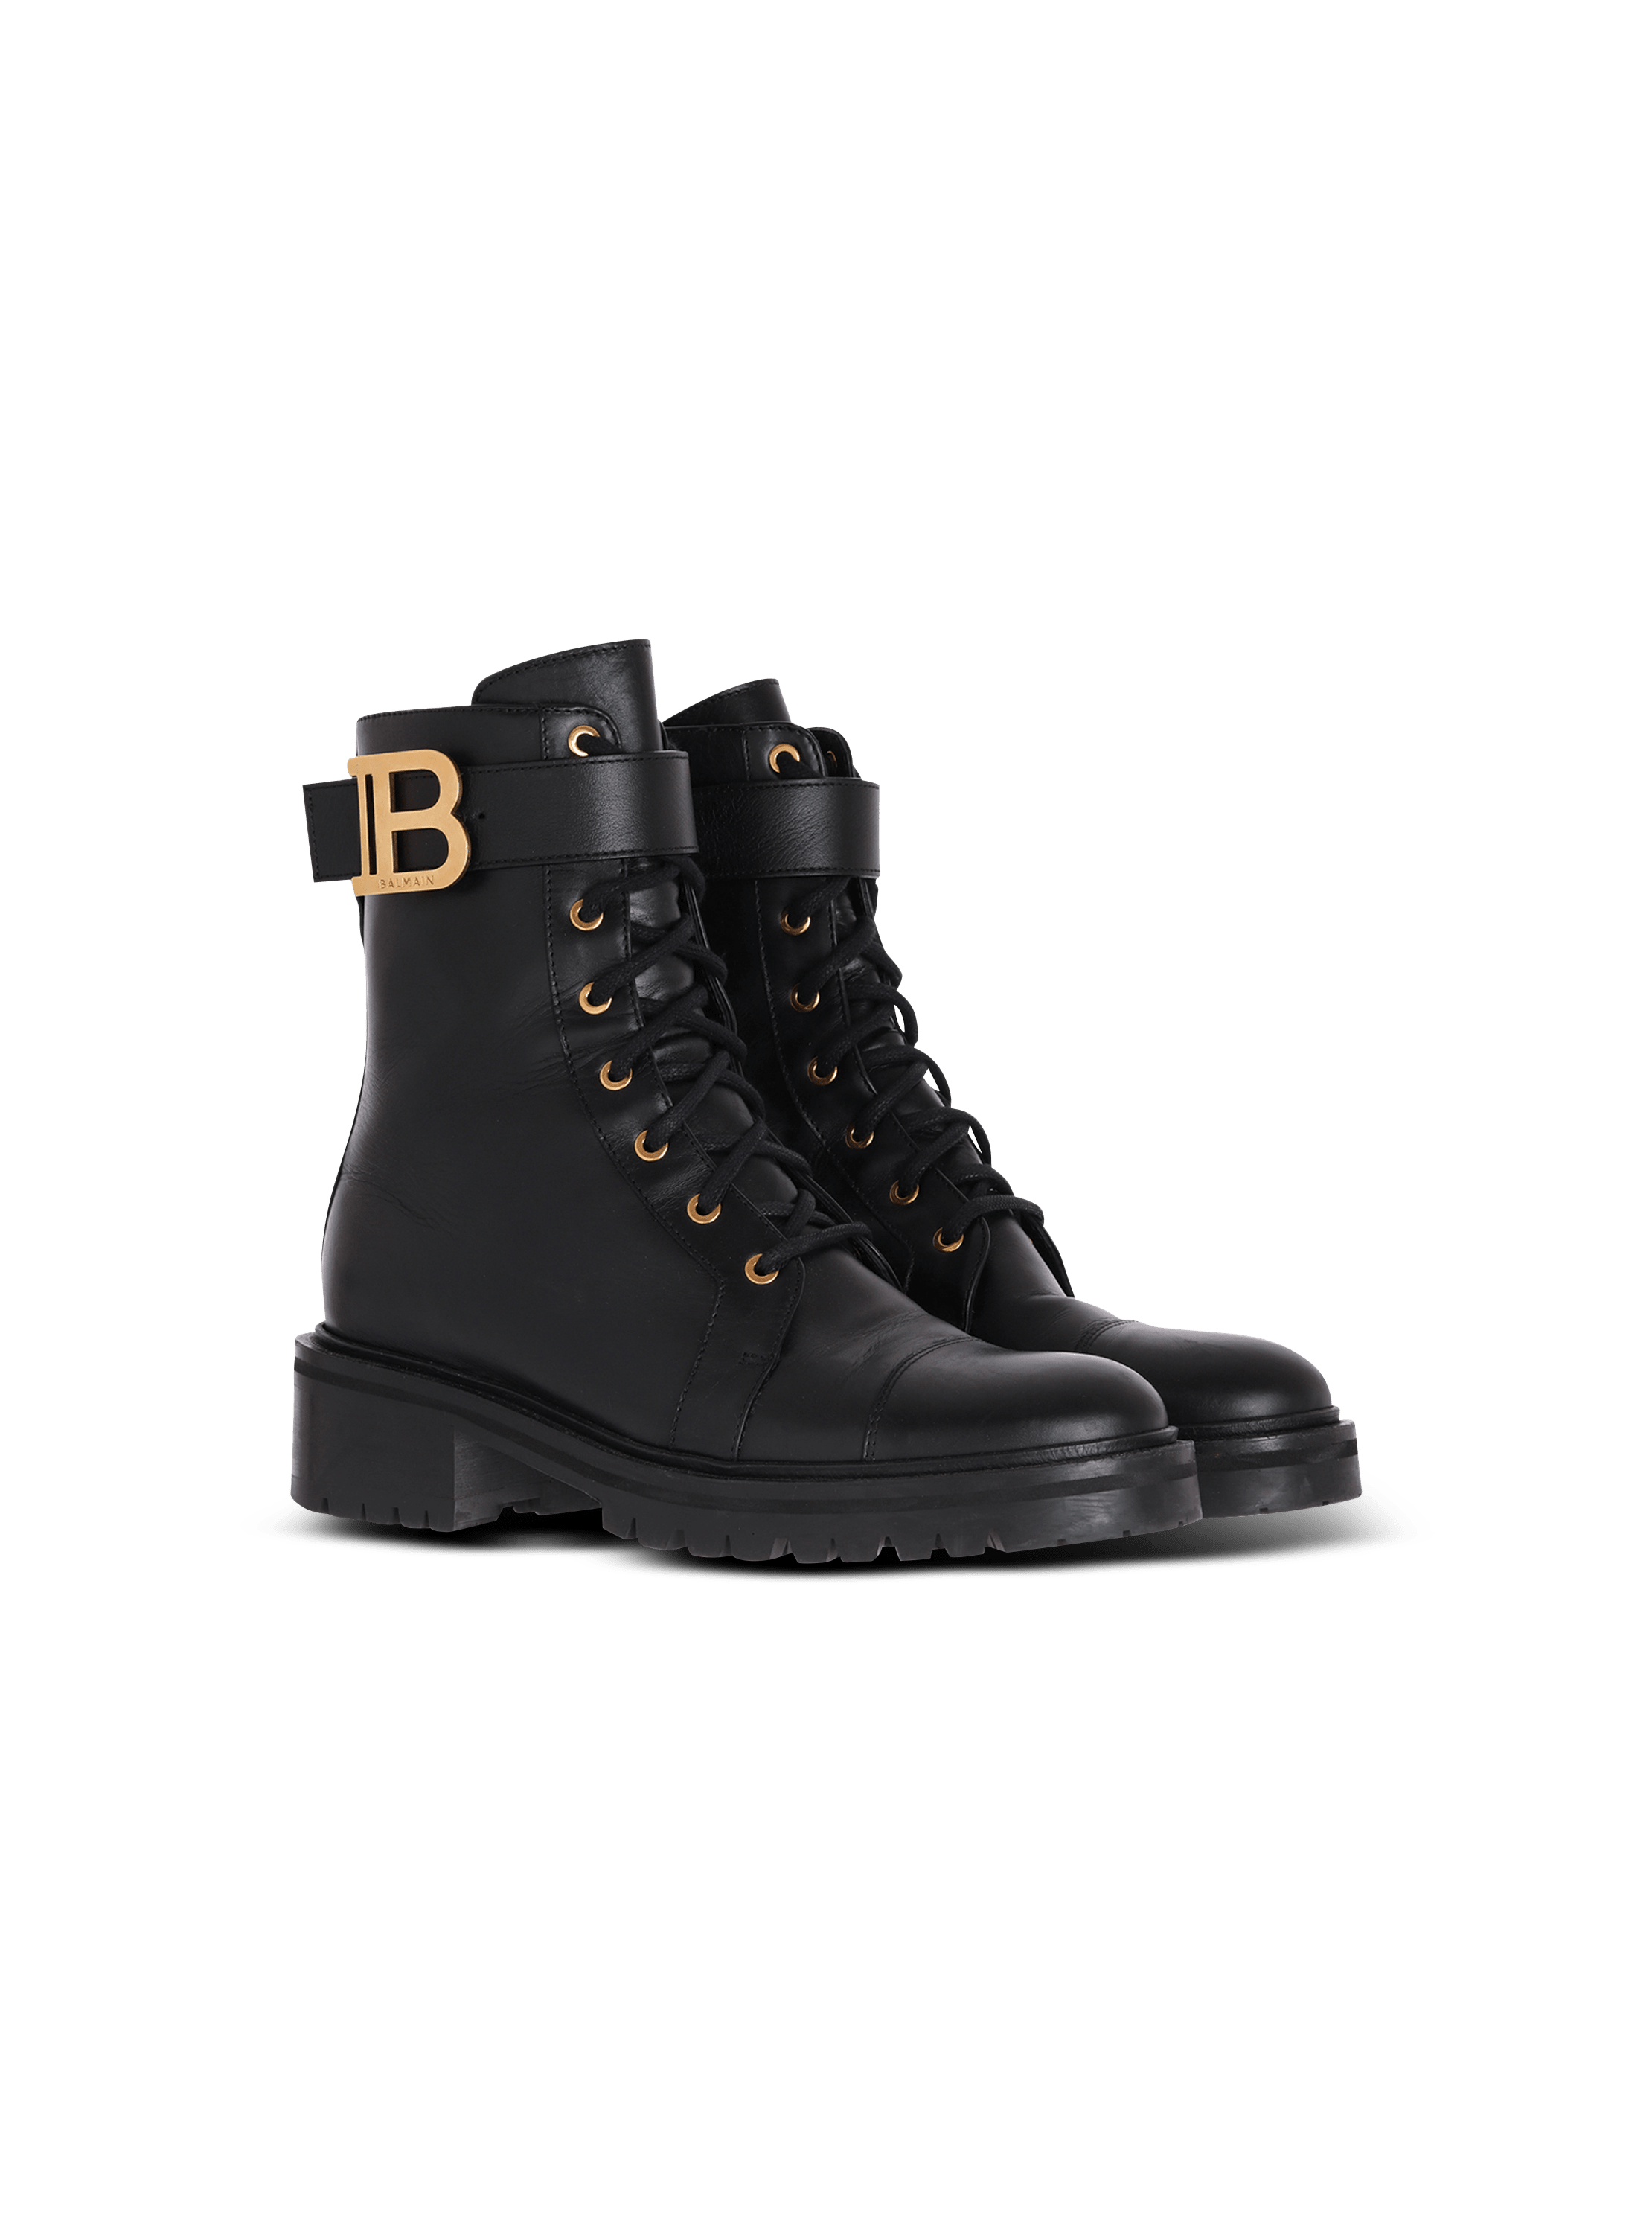 Adventure in Elegance: Introducing Balmain's Ranger Romy Boots